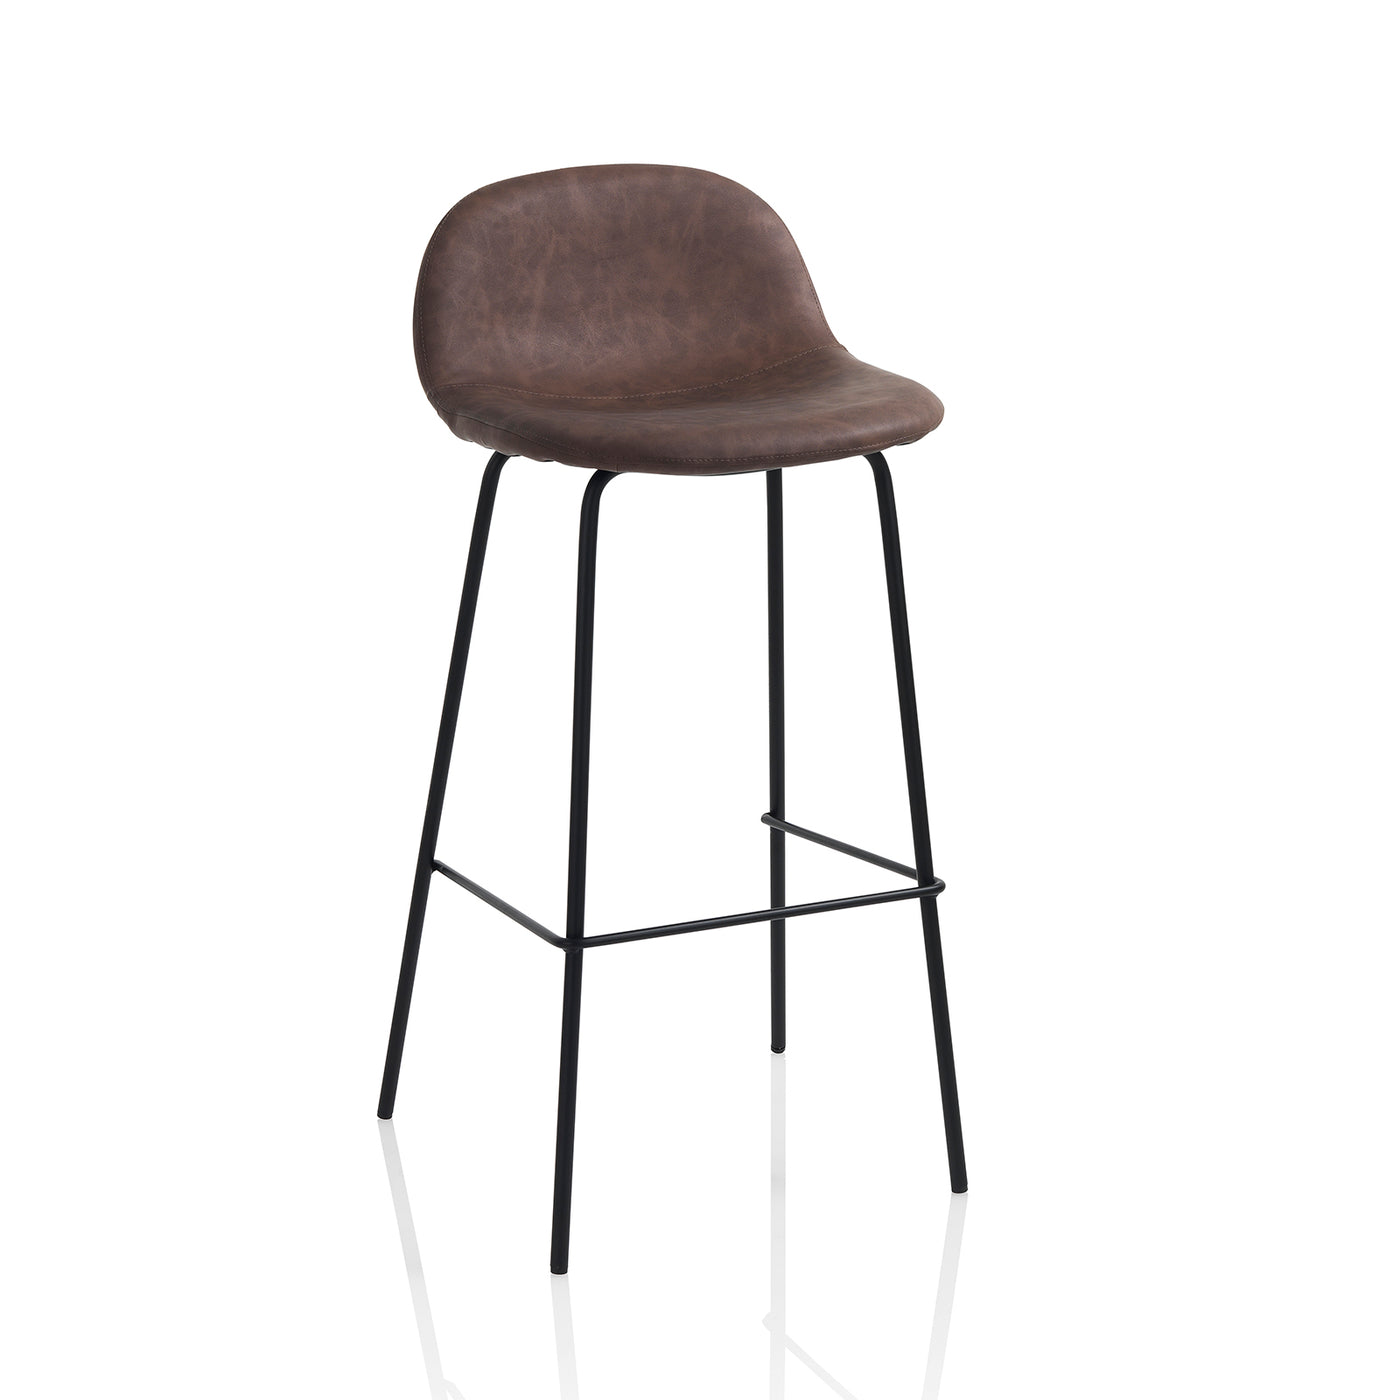 Set of 2 brown EVRY stools